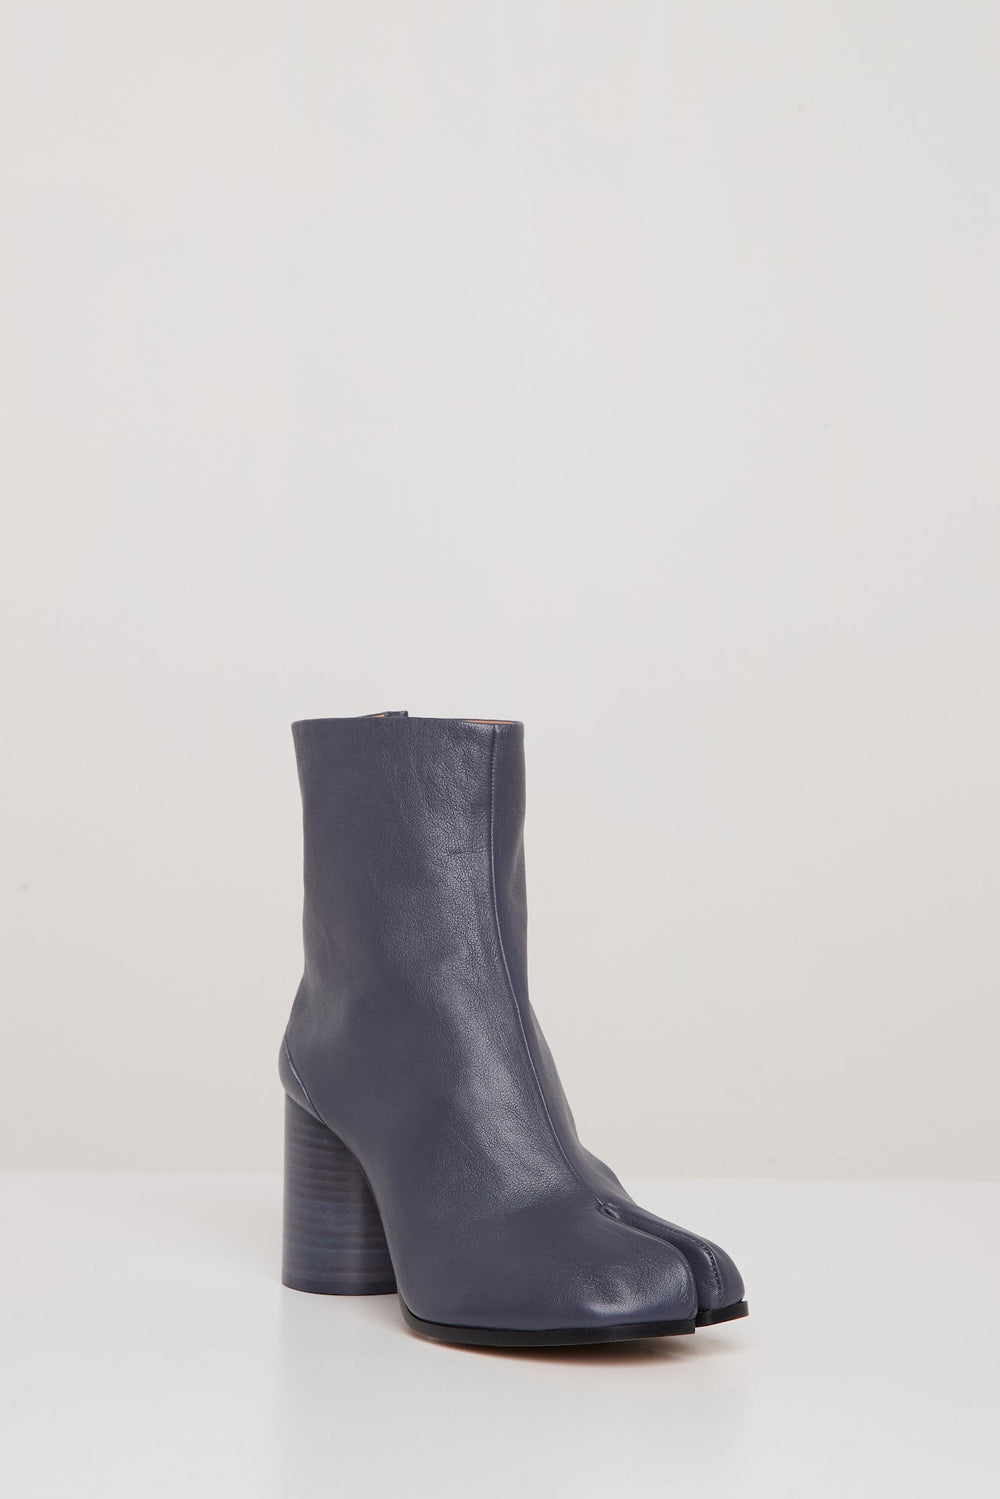 Maison Margiela Tabi Ankle Boots in Petrol Blue – Antidote Fashion 